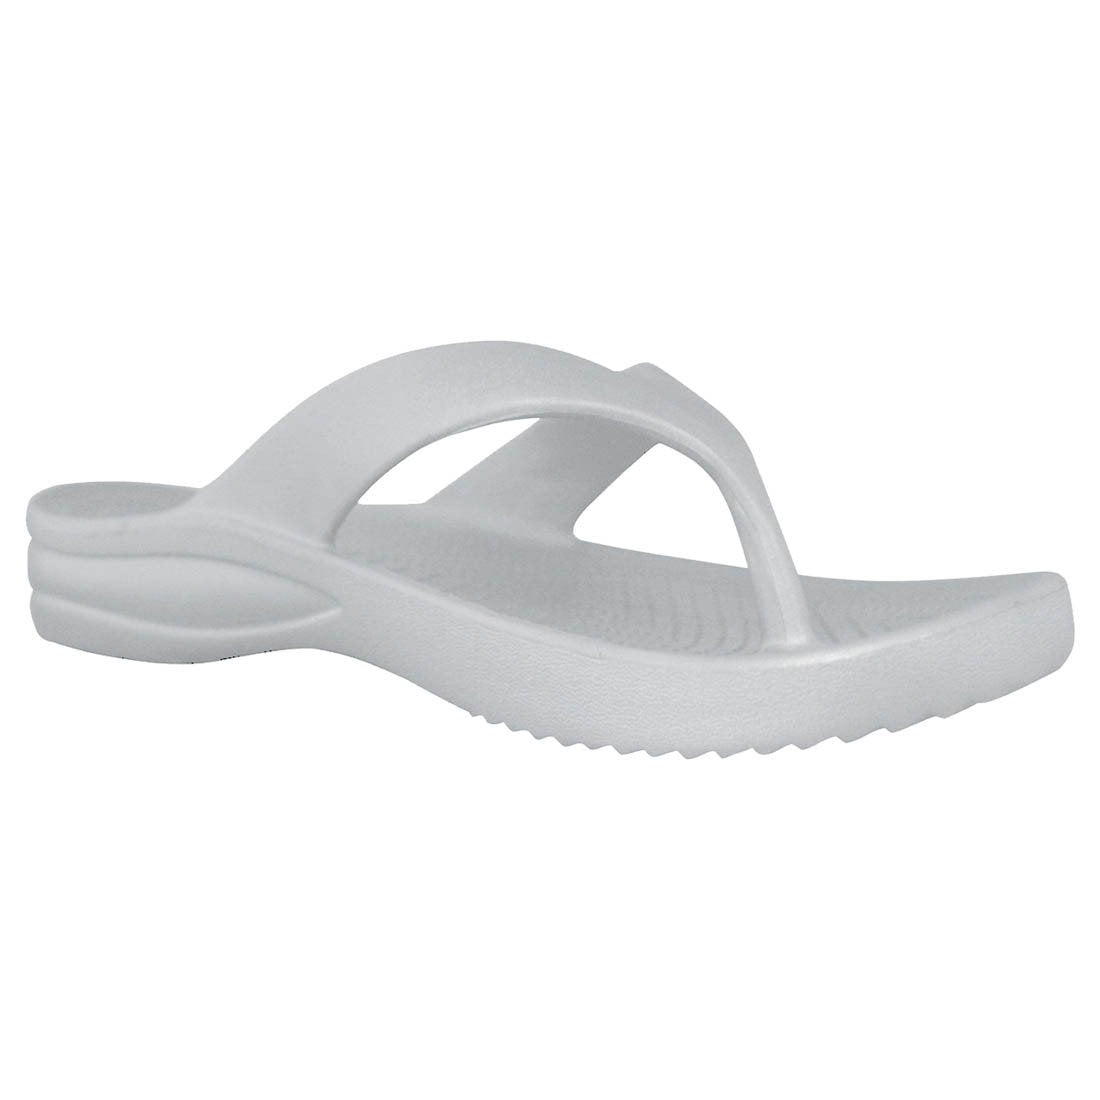 Women's Flip Flops - White by DAWGS USA